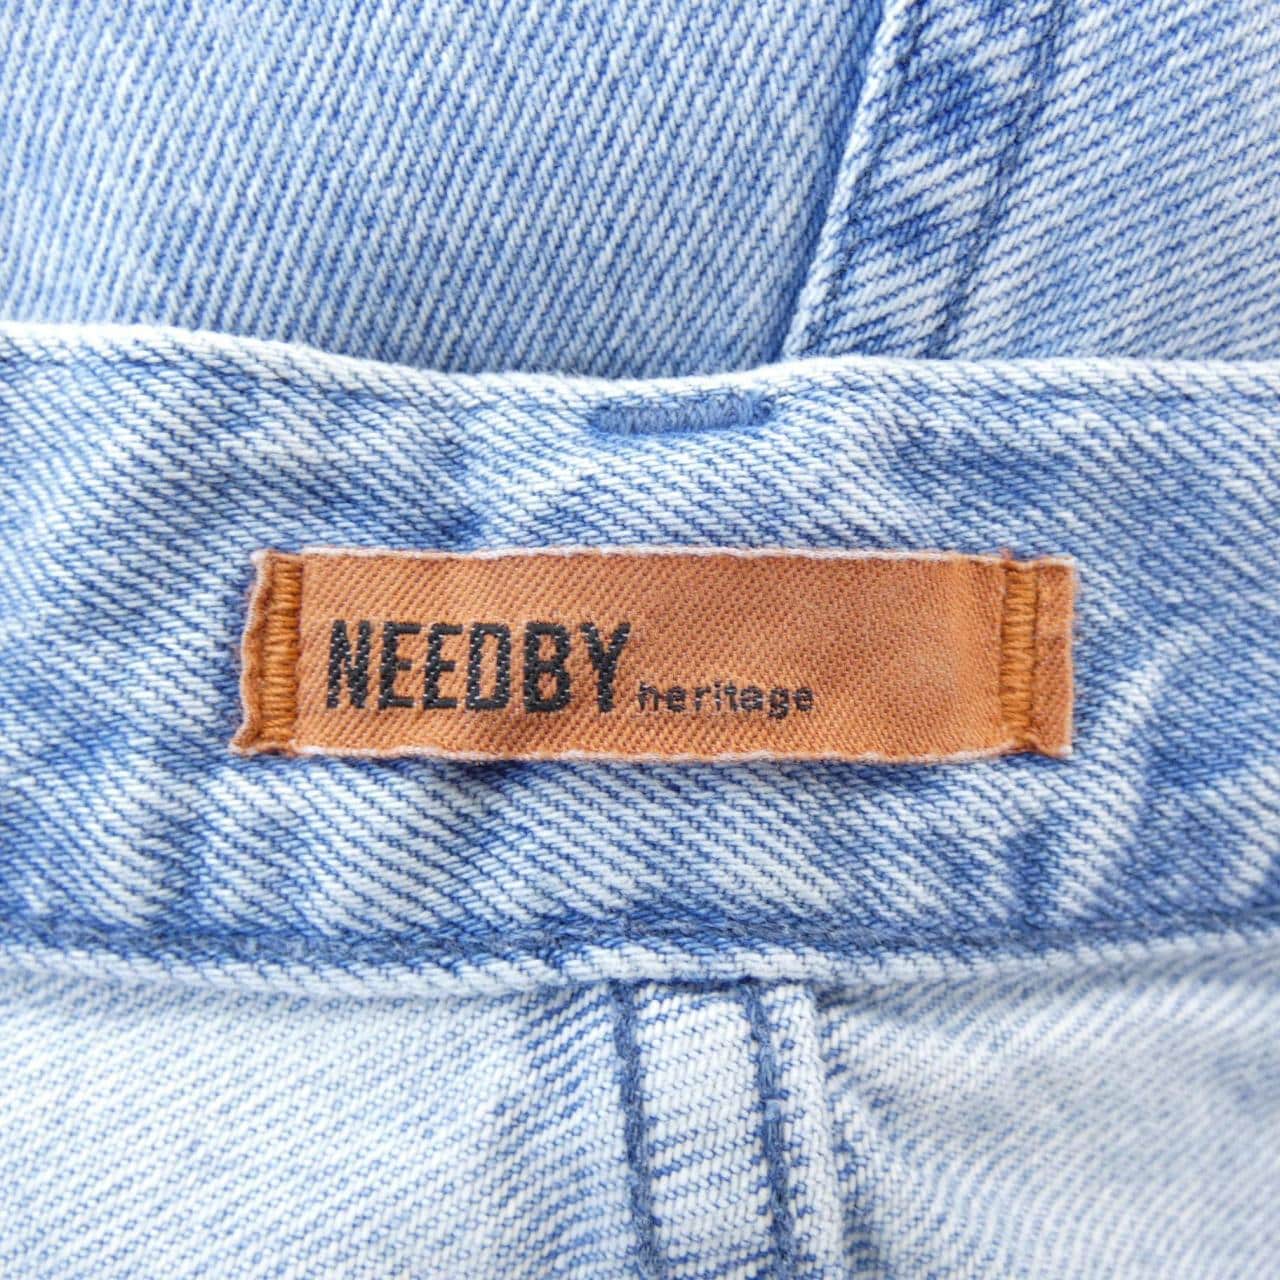 NEEDBY HERITAGE牛仔褲